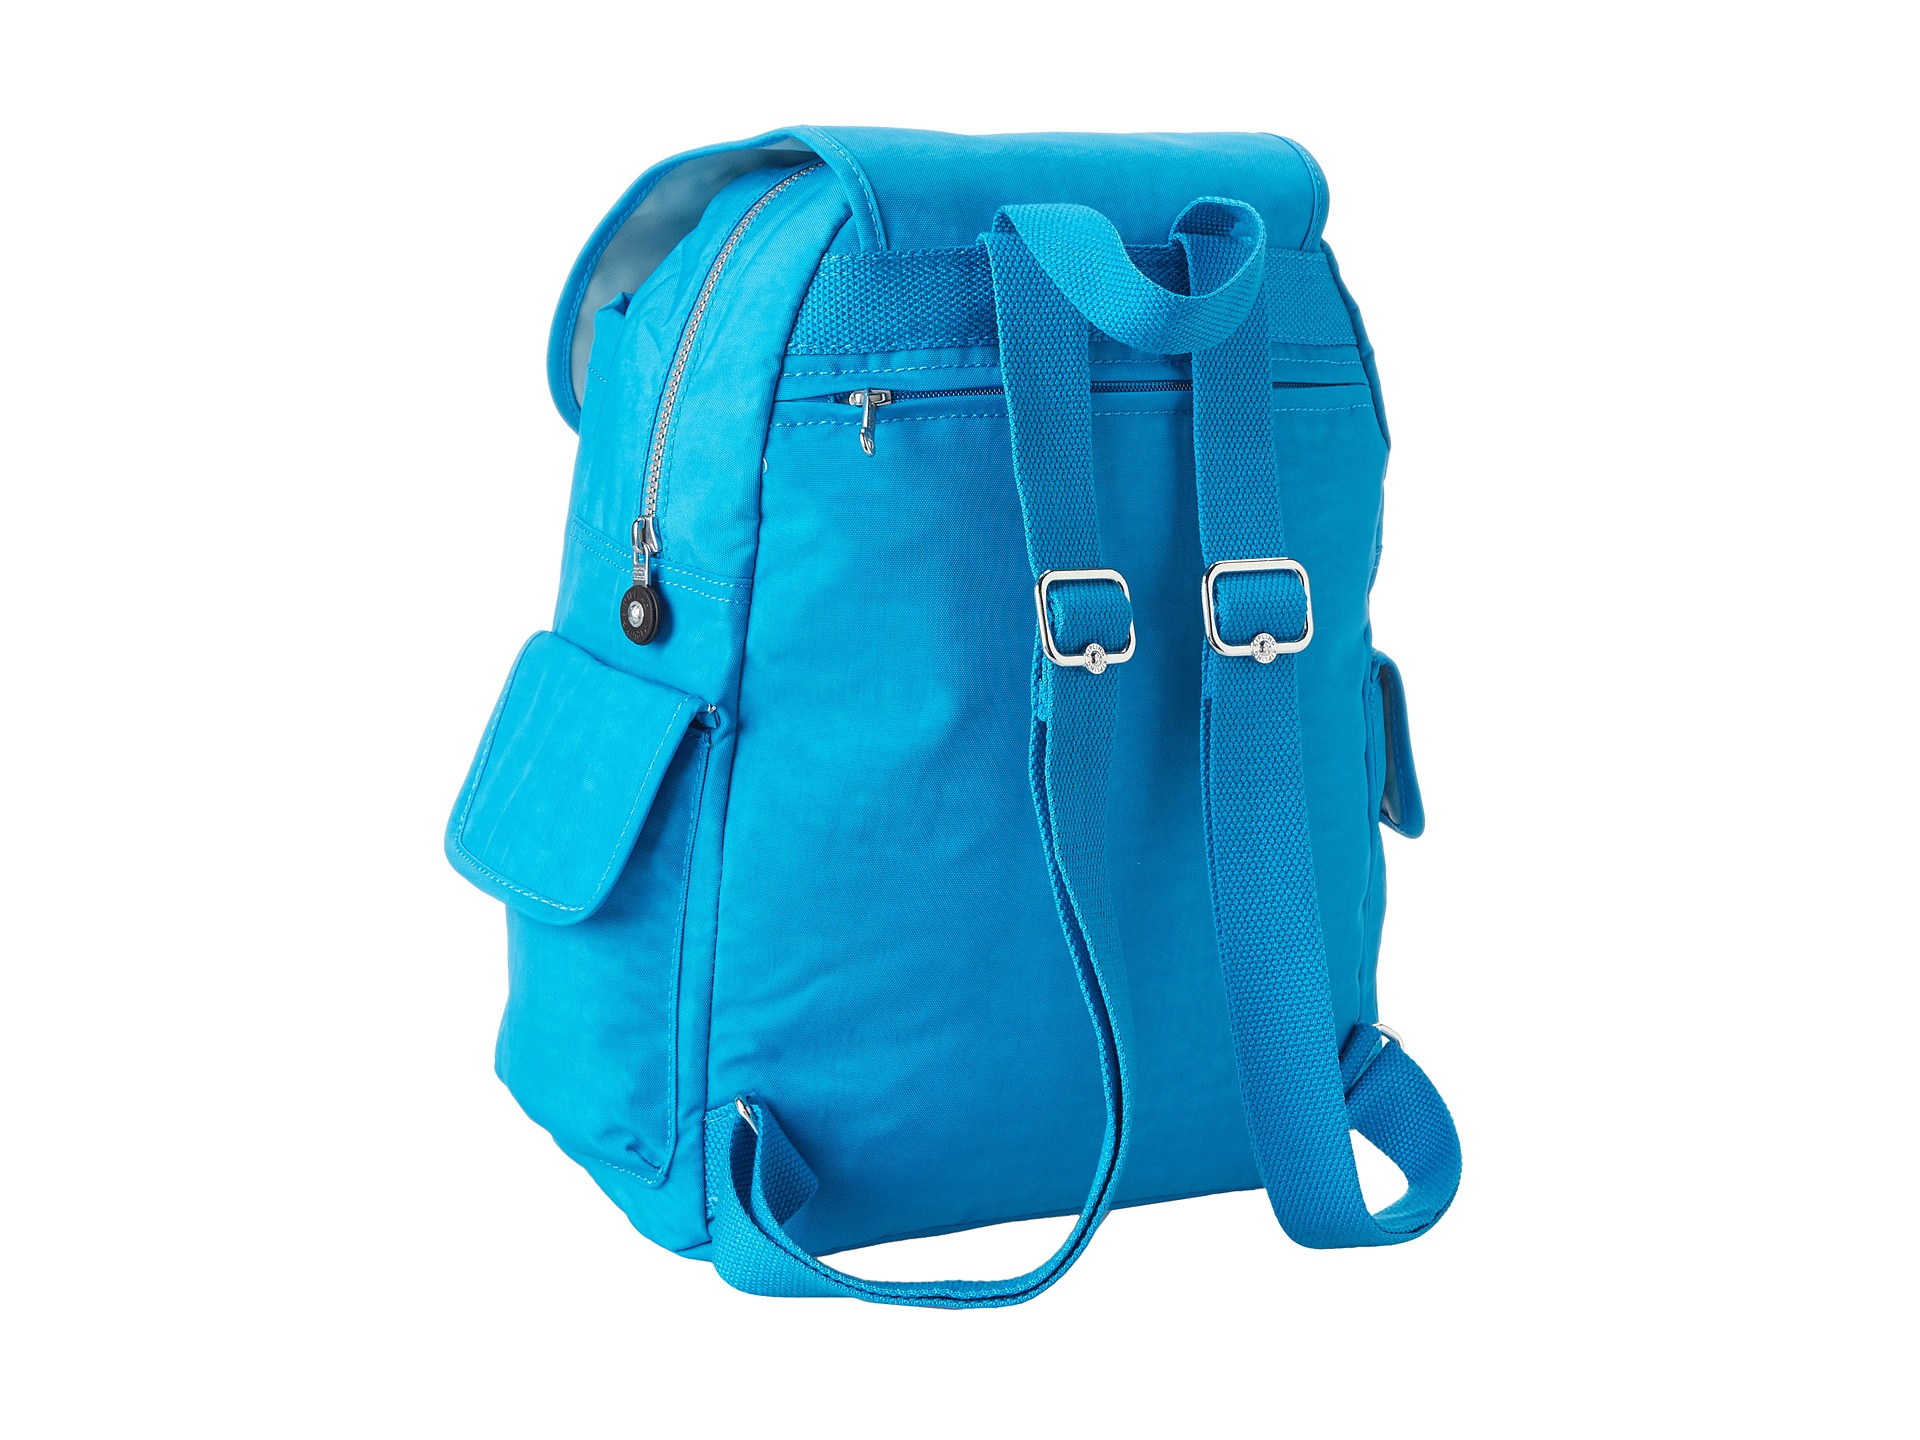 Kipling Ravier Backpack, Bags | Shipped Free at Zappos